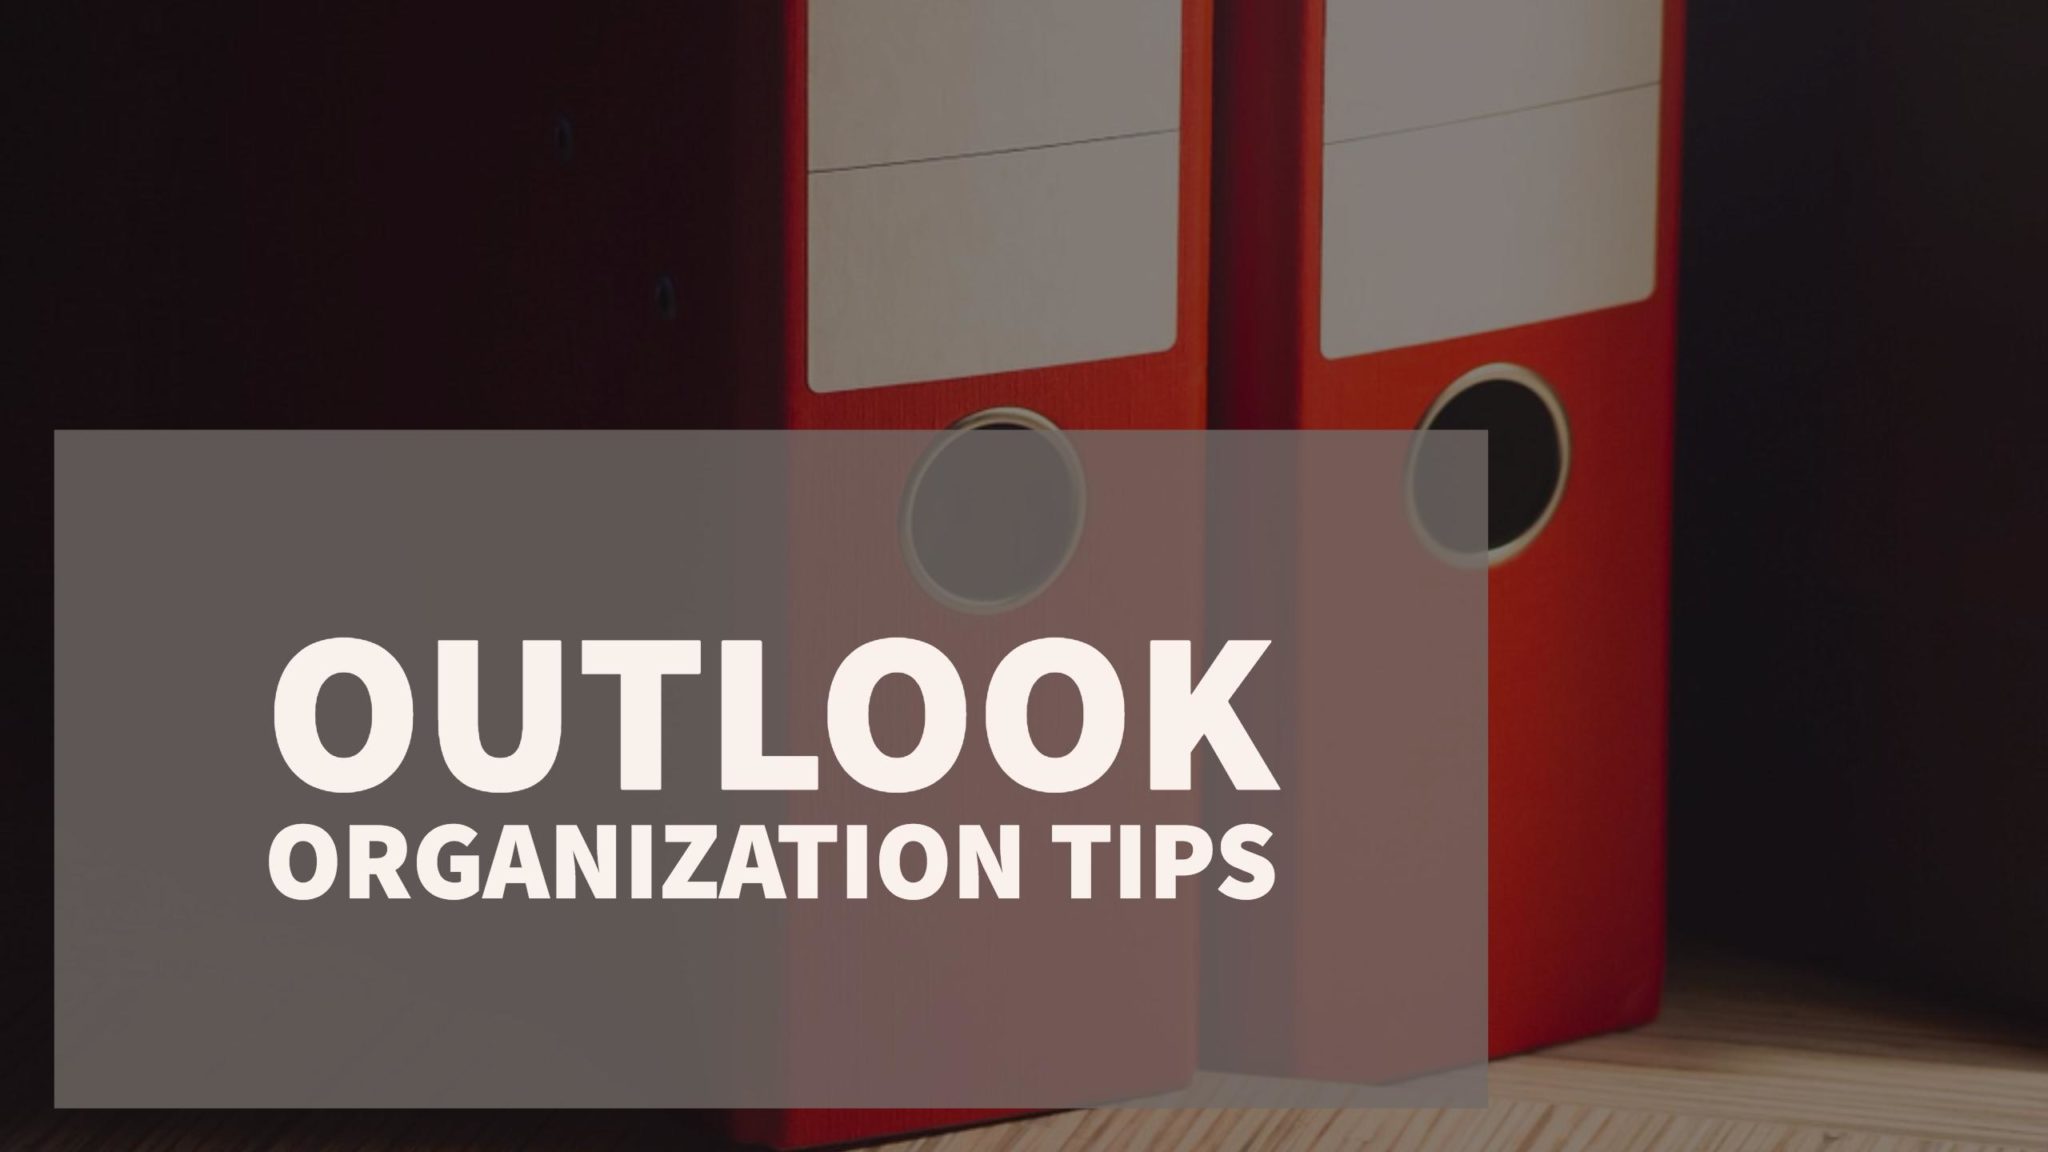 Outlook organization tips